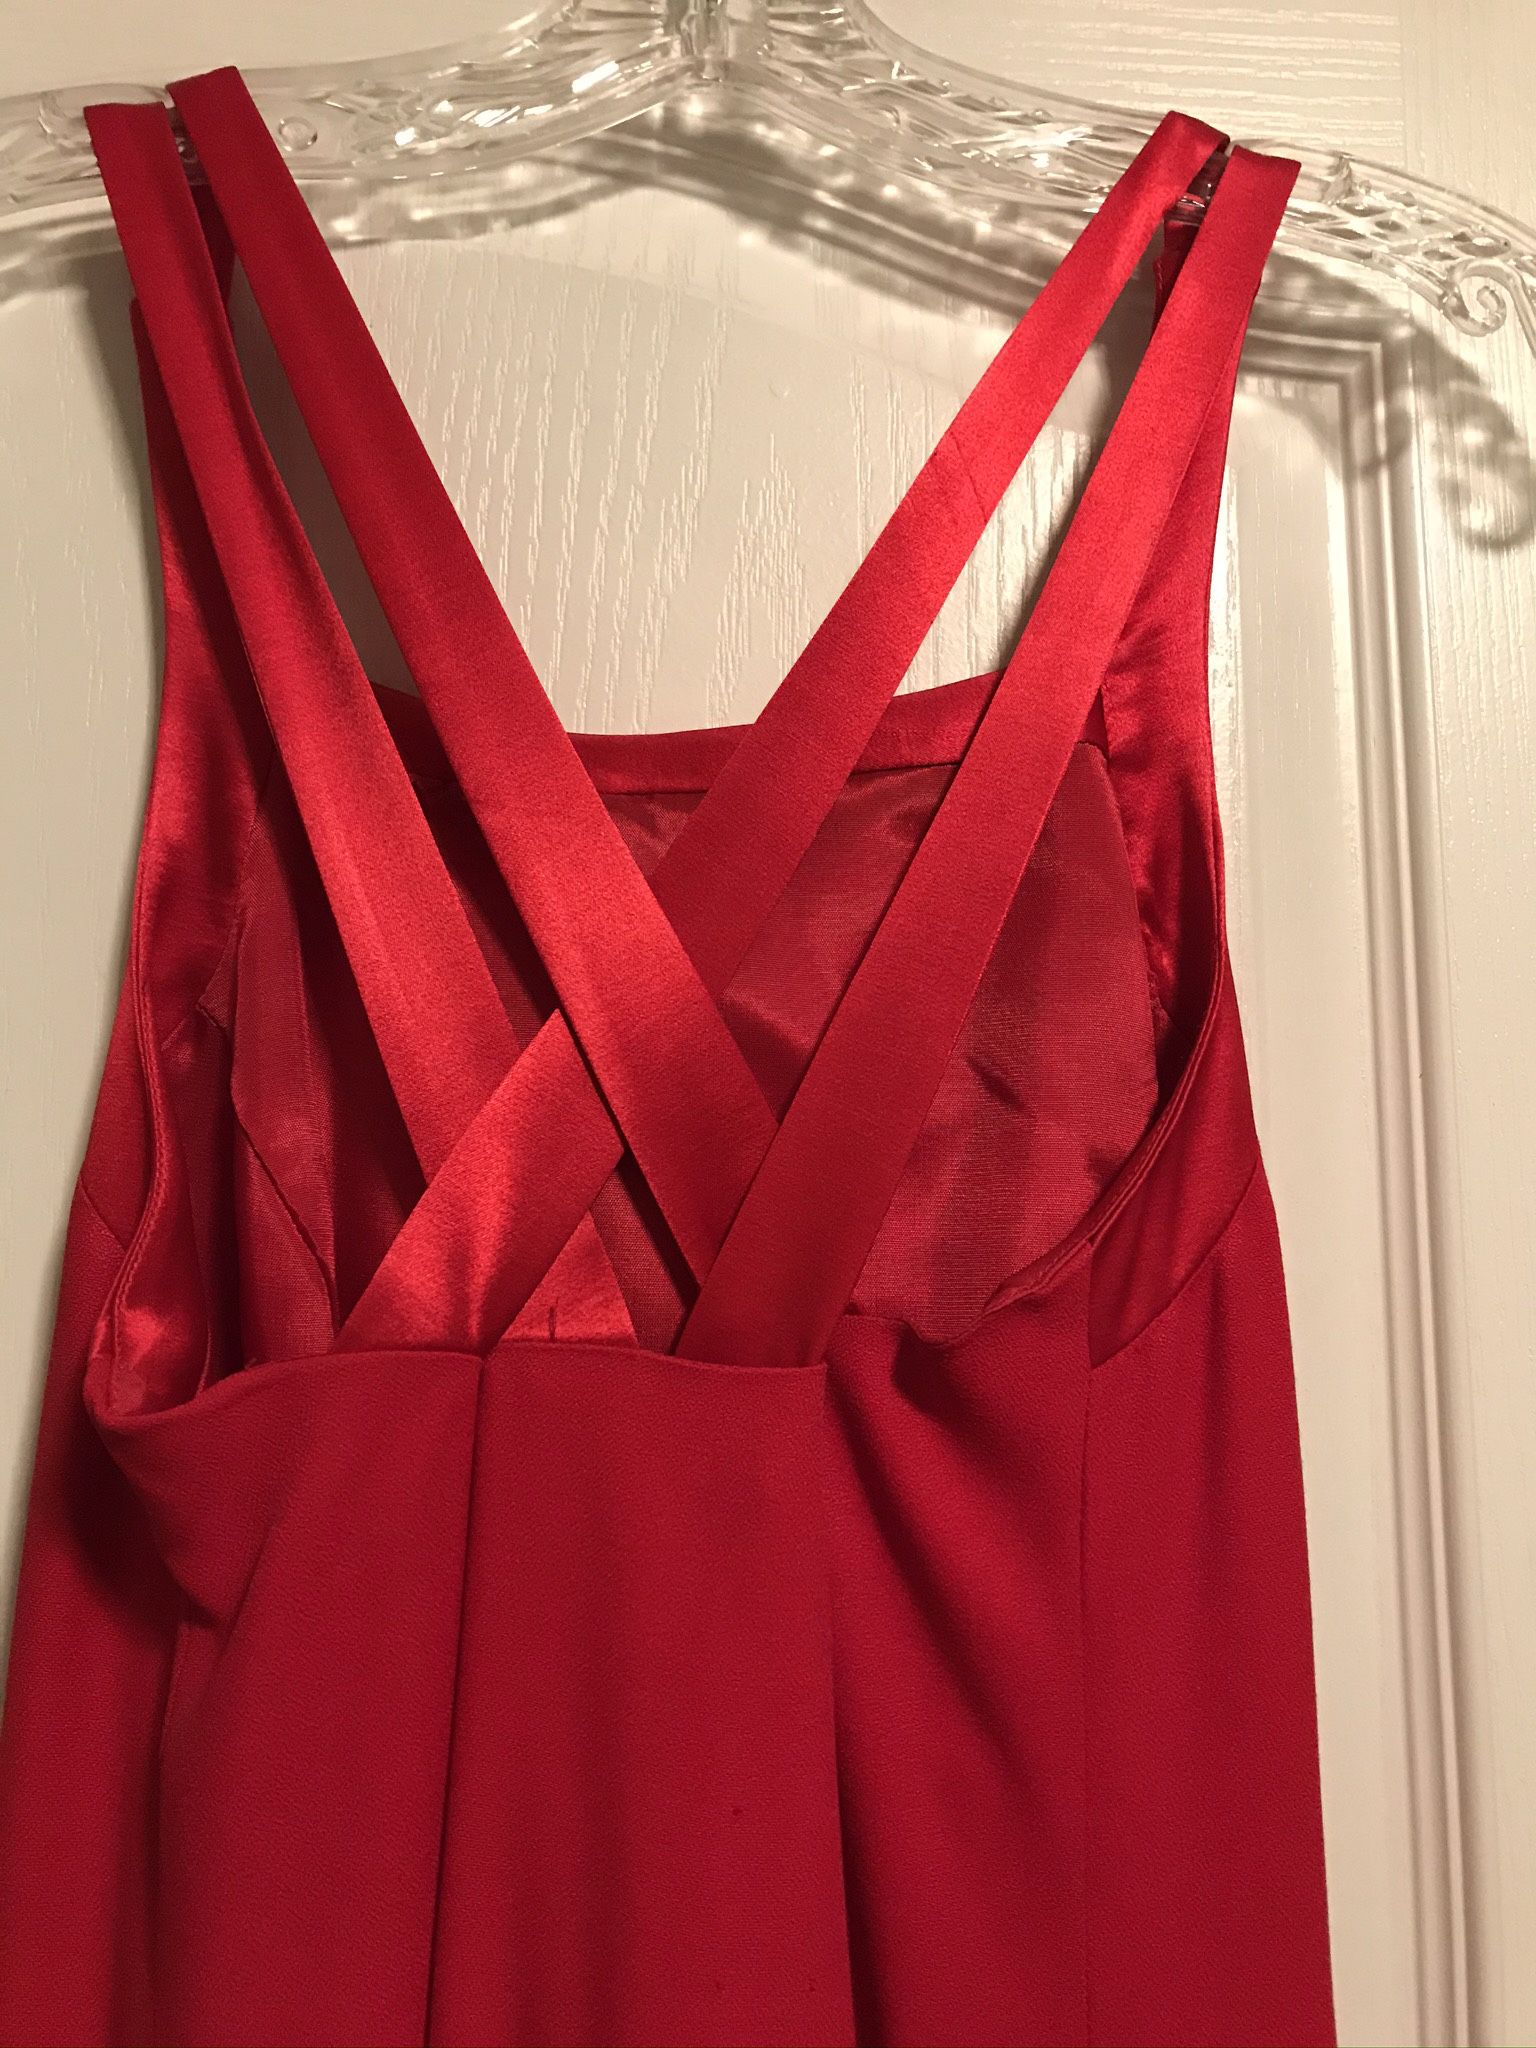 CDC Red Dress